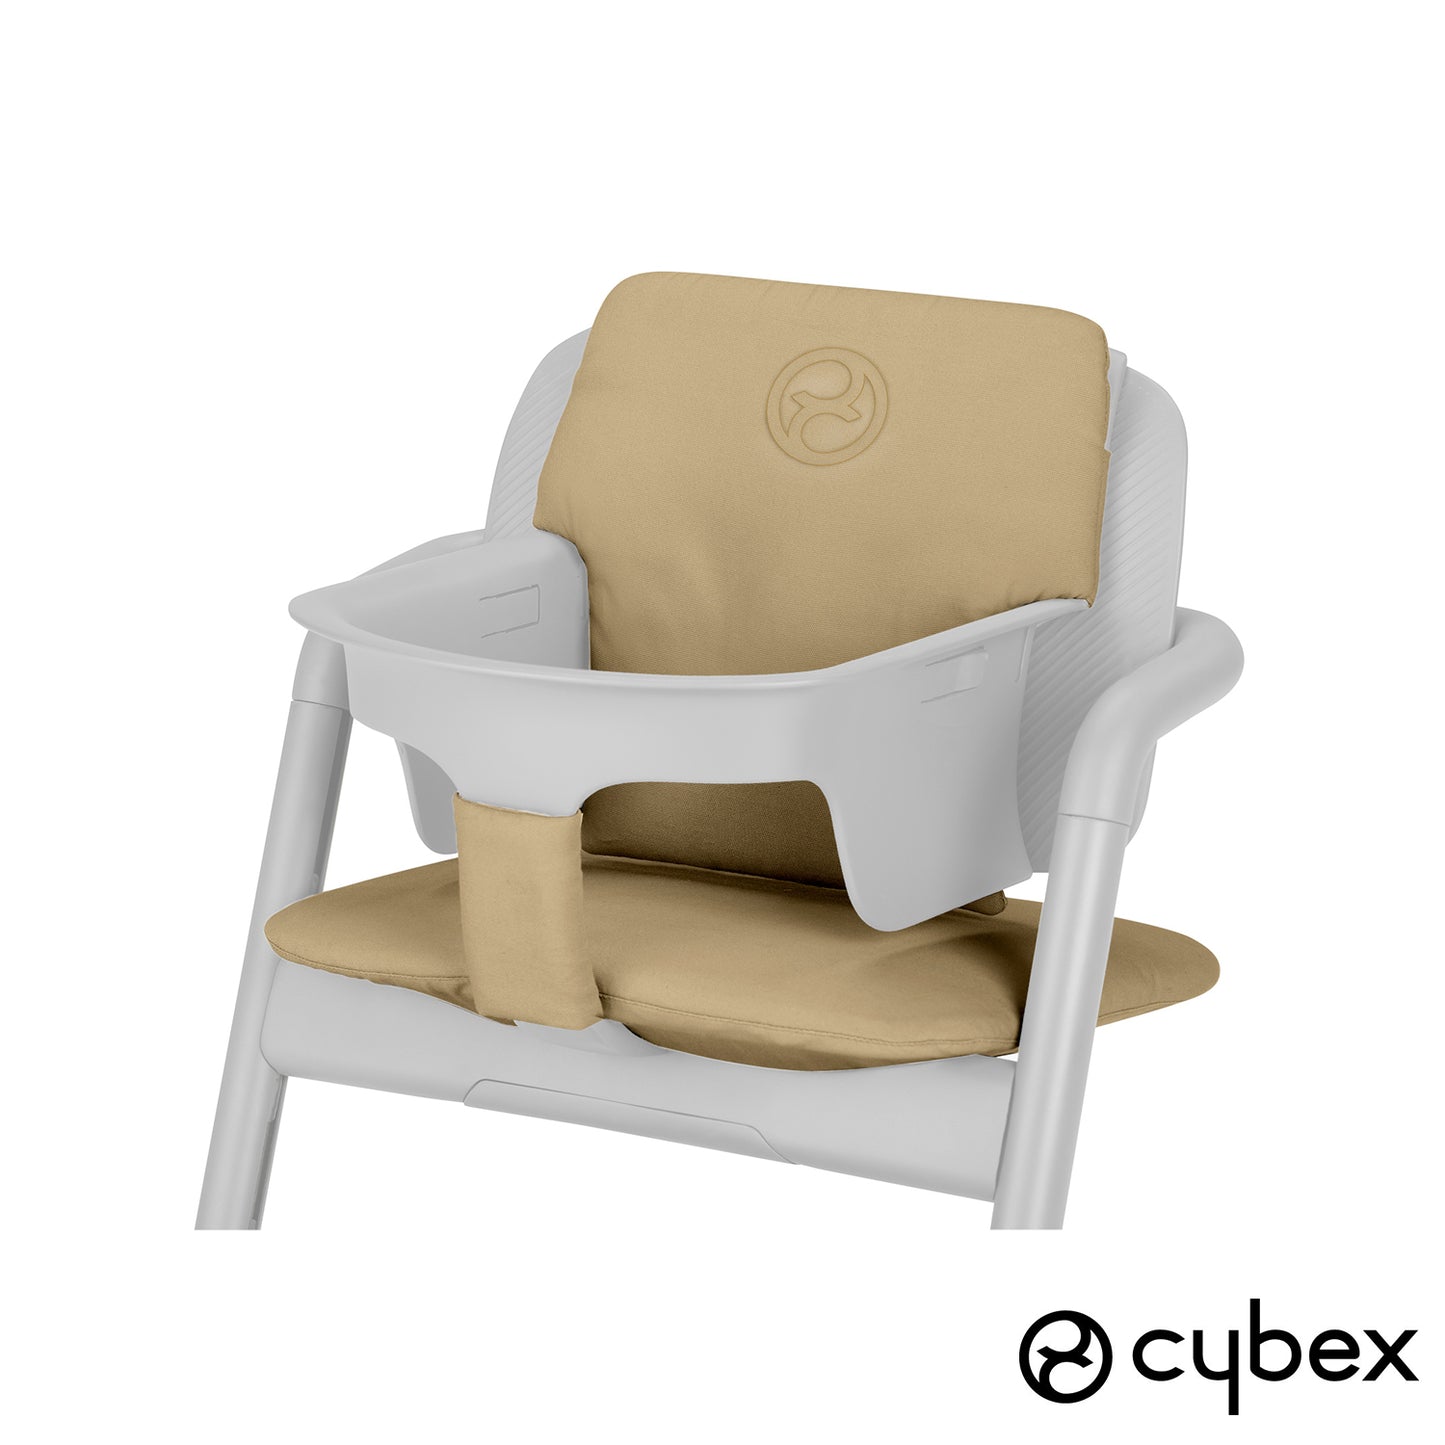 Cybex - Cuscino Comfort Inlay per Seggiolone LEMO Chair